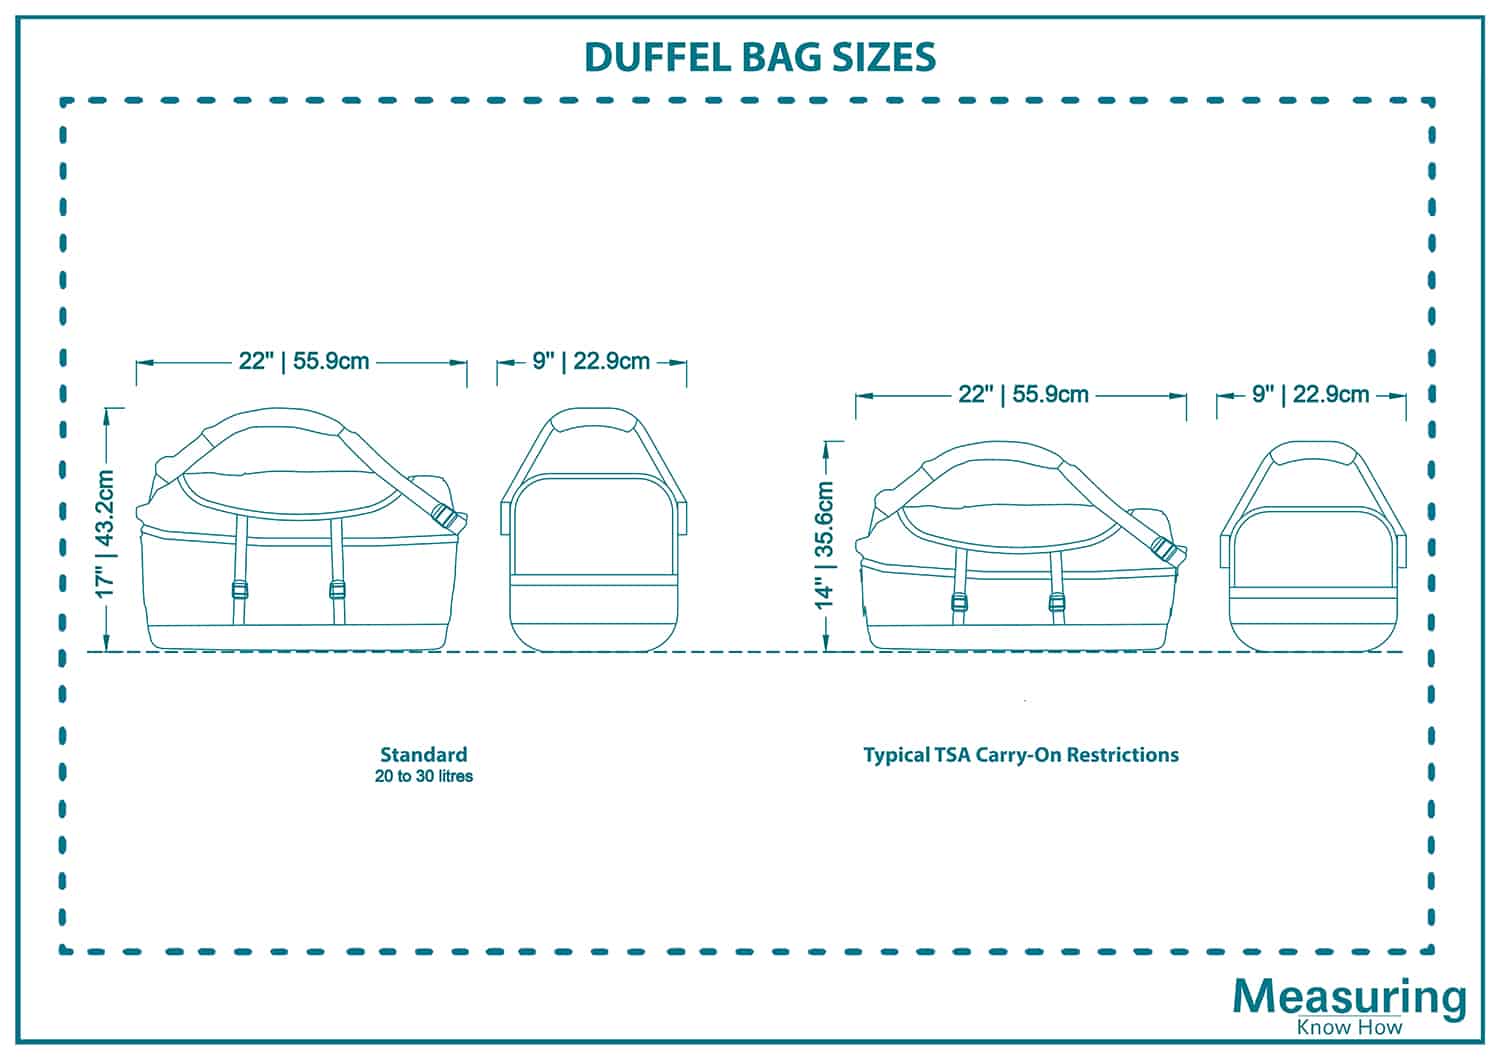 Duffel bag sizes